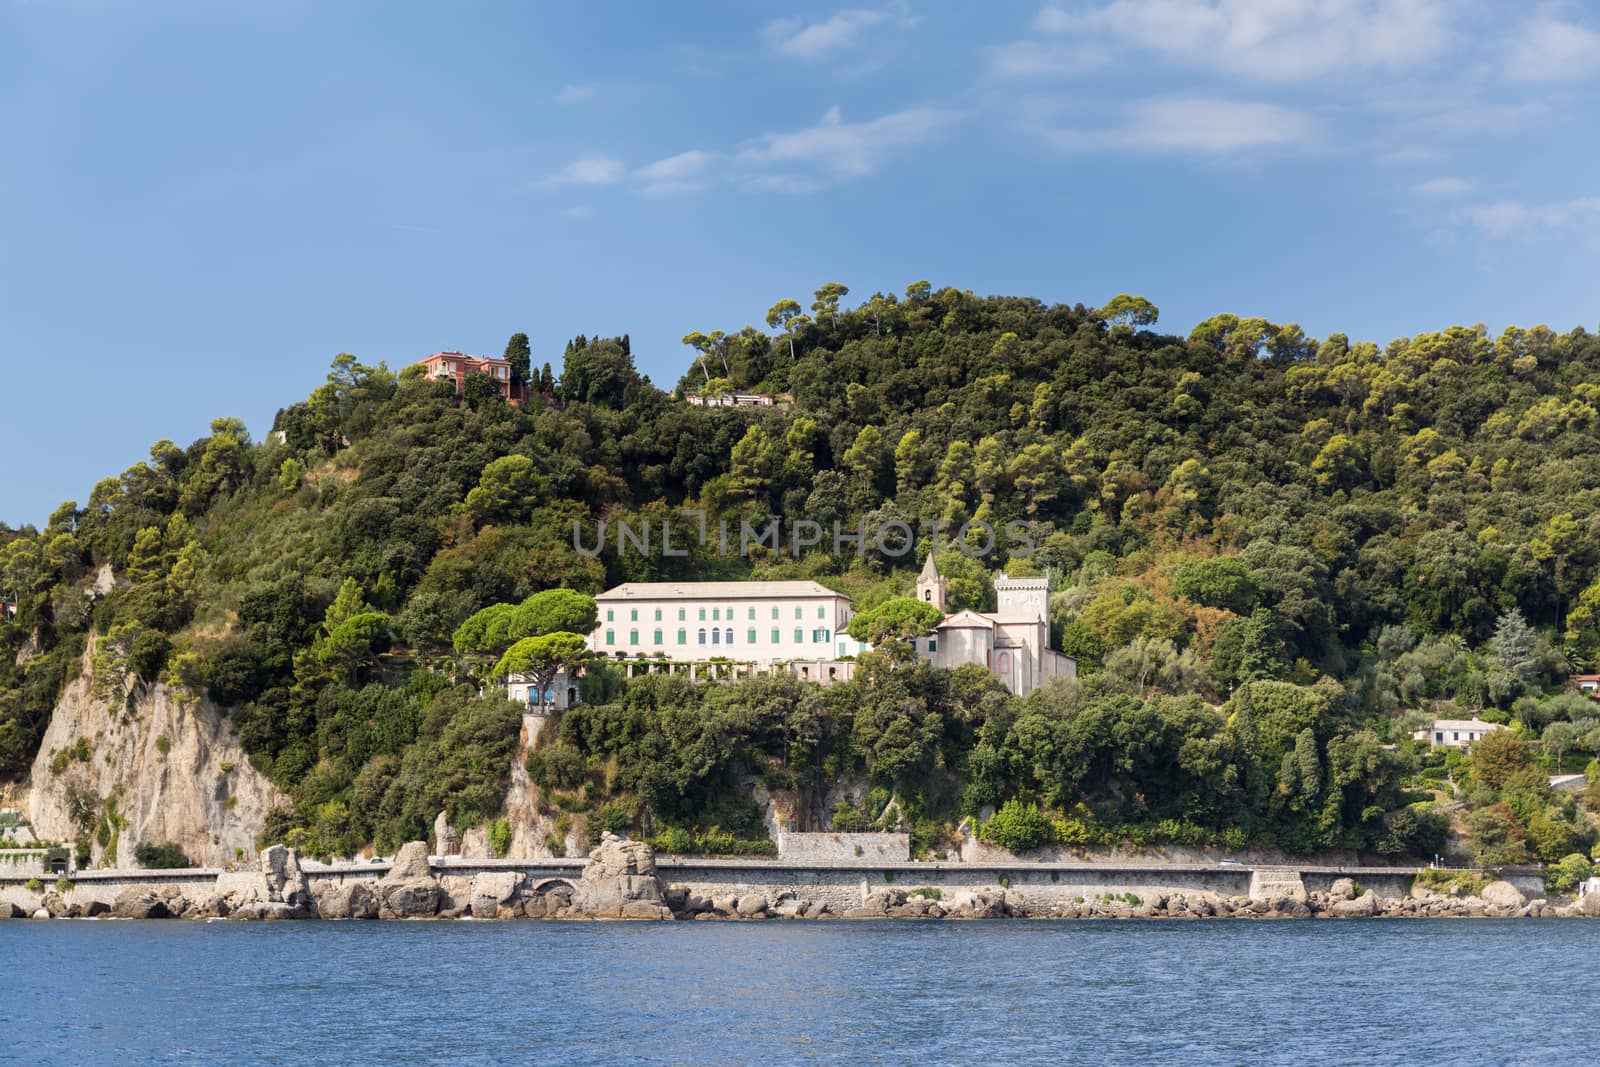 Cervara Abbey on the coastline between Portofino and Santa Margherita Ligure in Italy